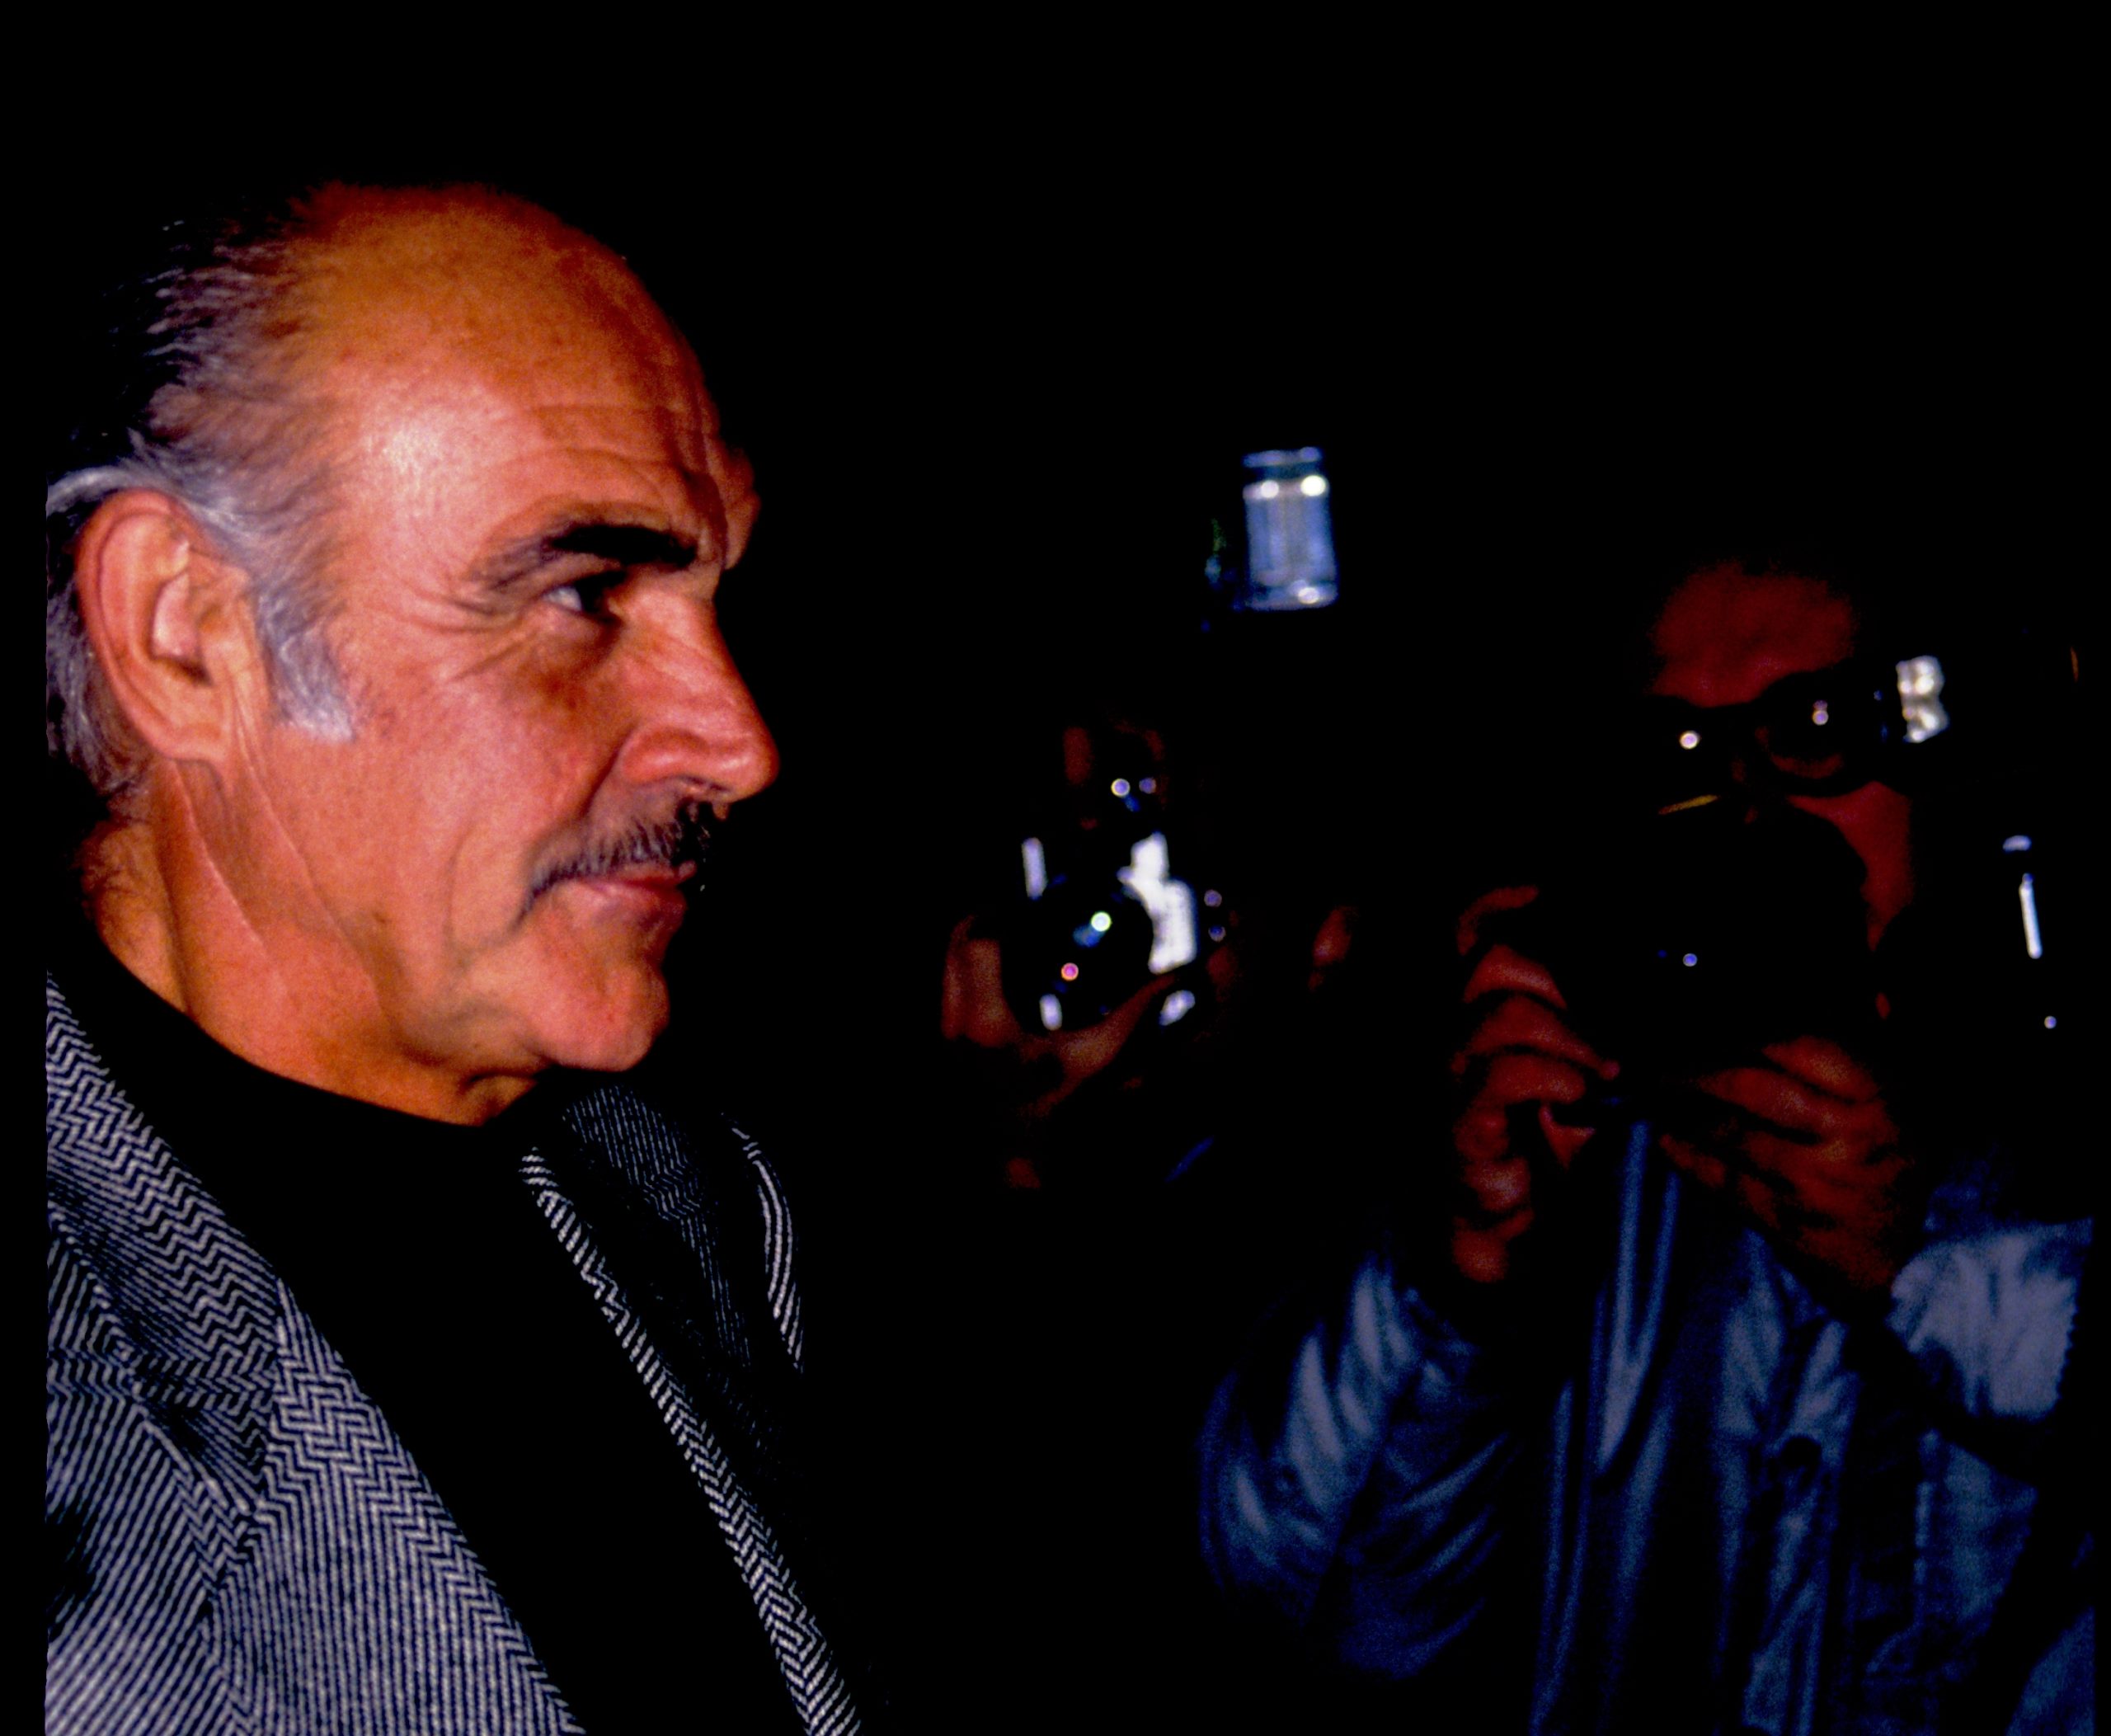 Los,Angeles,-,Circa,1991:,Sean,Connery,Walks,By,Paparazzi